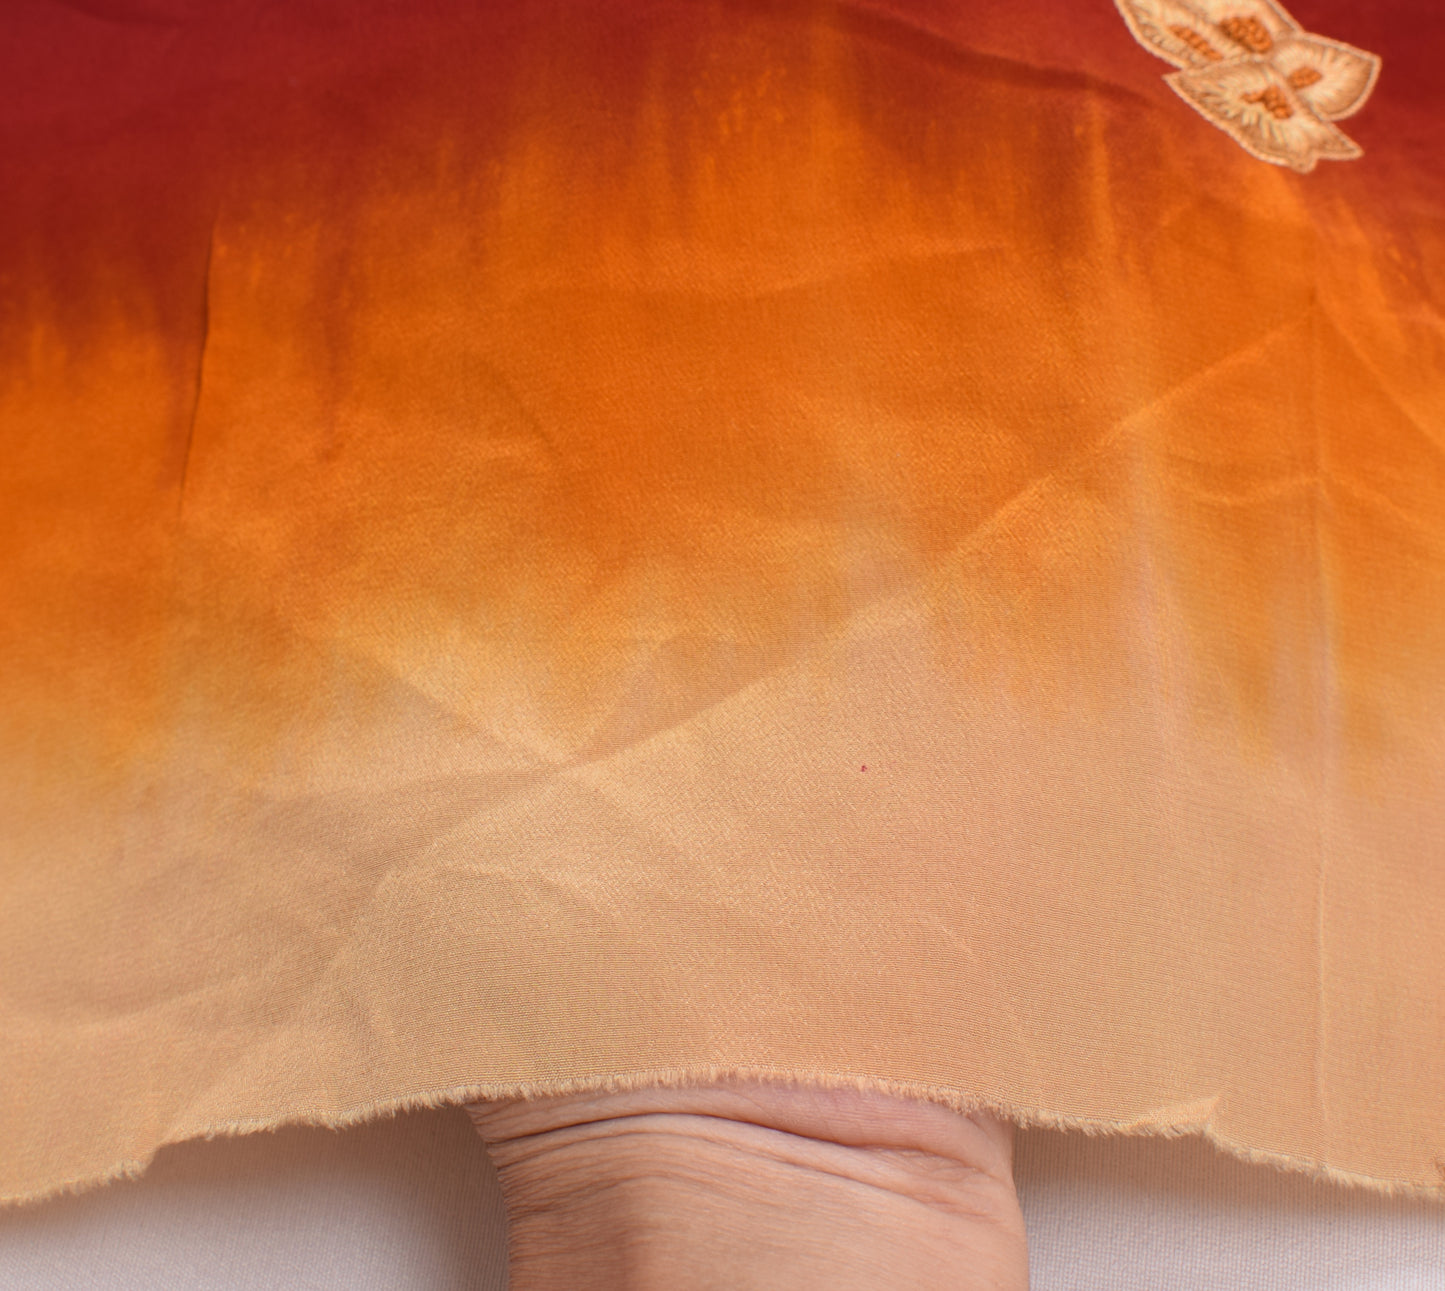 Sushila Vintage Maroon Sari Remnant Scrap Crepe Silk Embroidered Craft Fabric